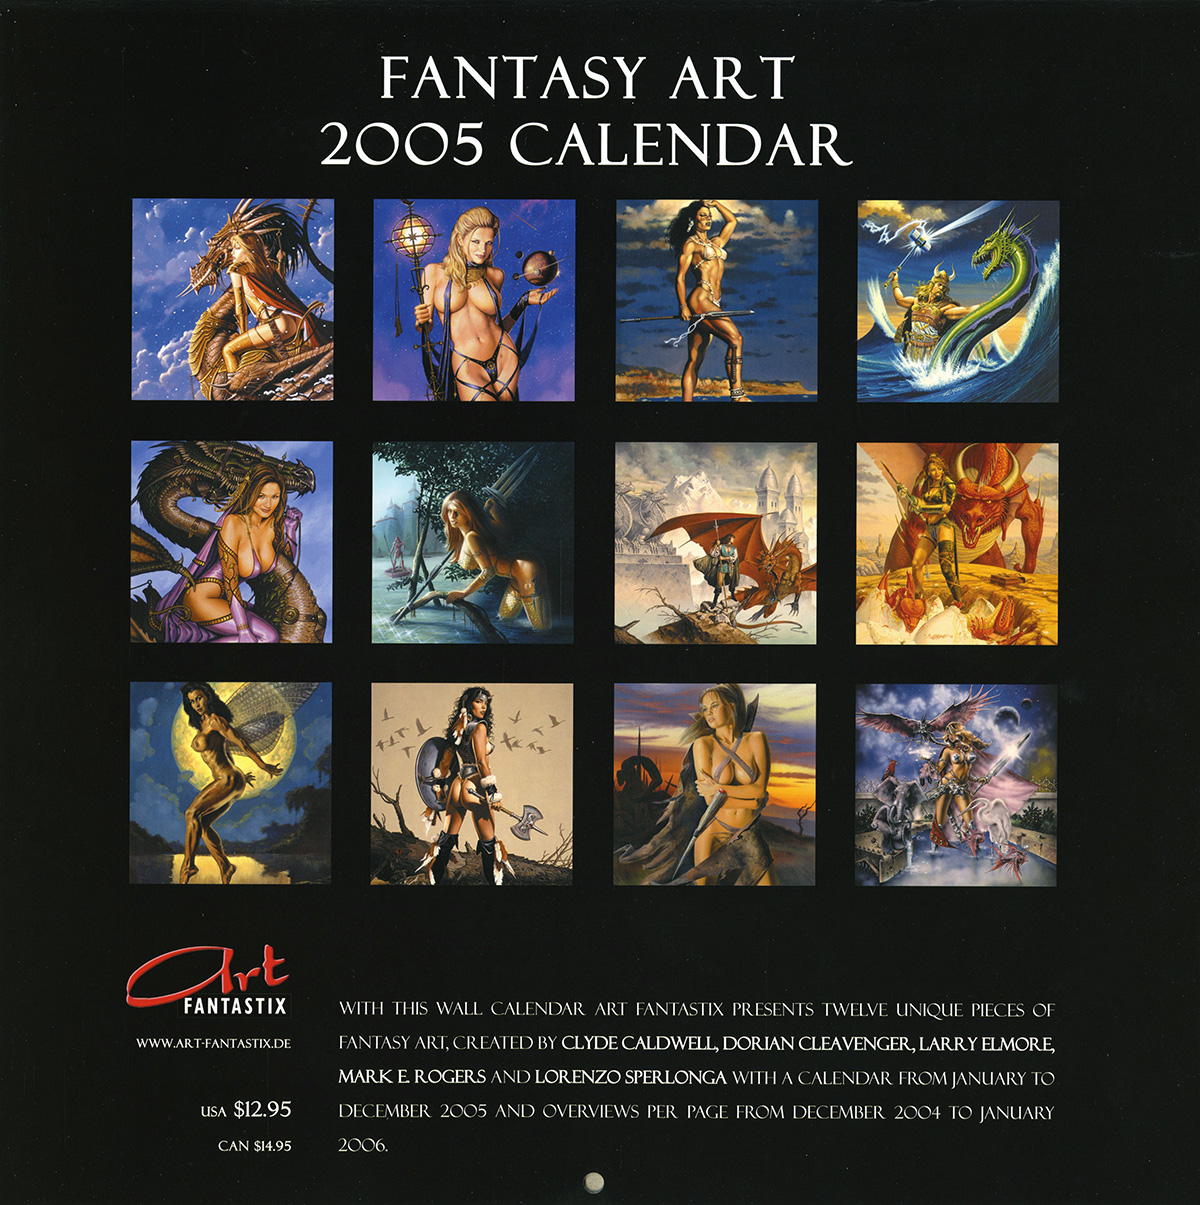 Art Fantastix 2005 Fantasy Art Calendar – Clyde Caldwell Online